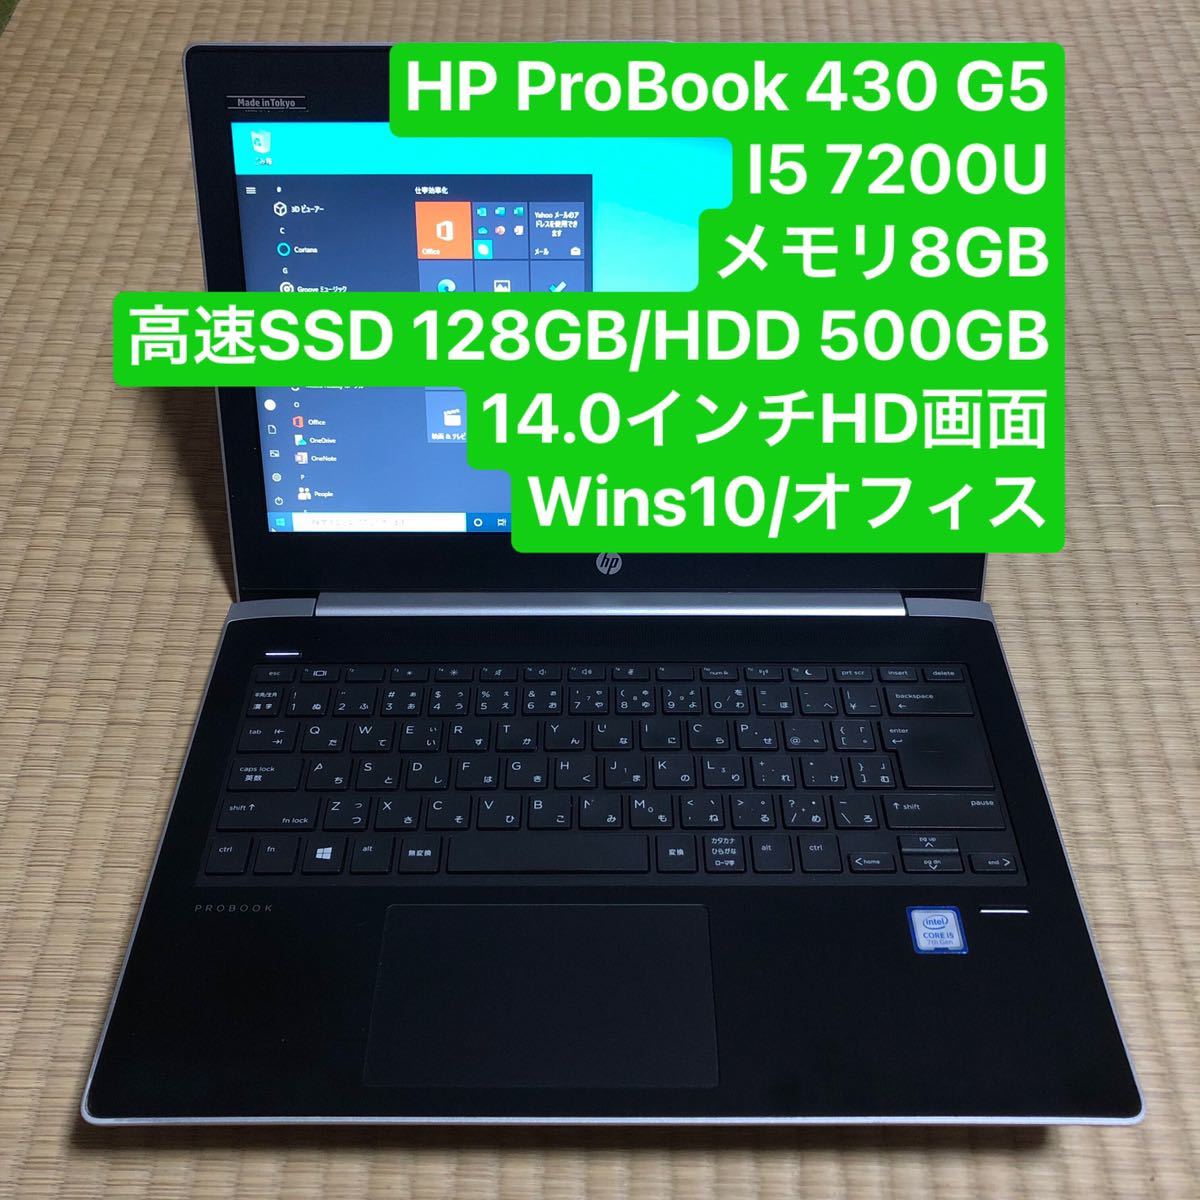 HP ProBook 430 G5 i5 7200U メモリ8GB高速SSD 128GB/HDD 500GB 14.0インチHD画面Windows10/オフィス